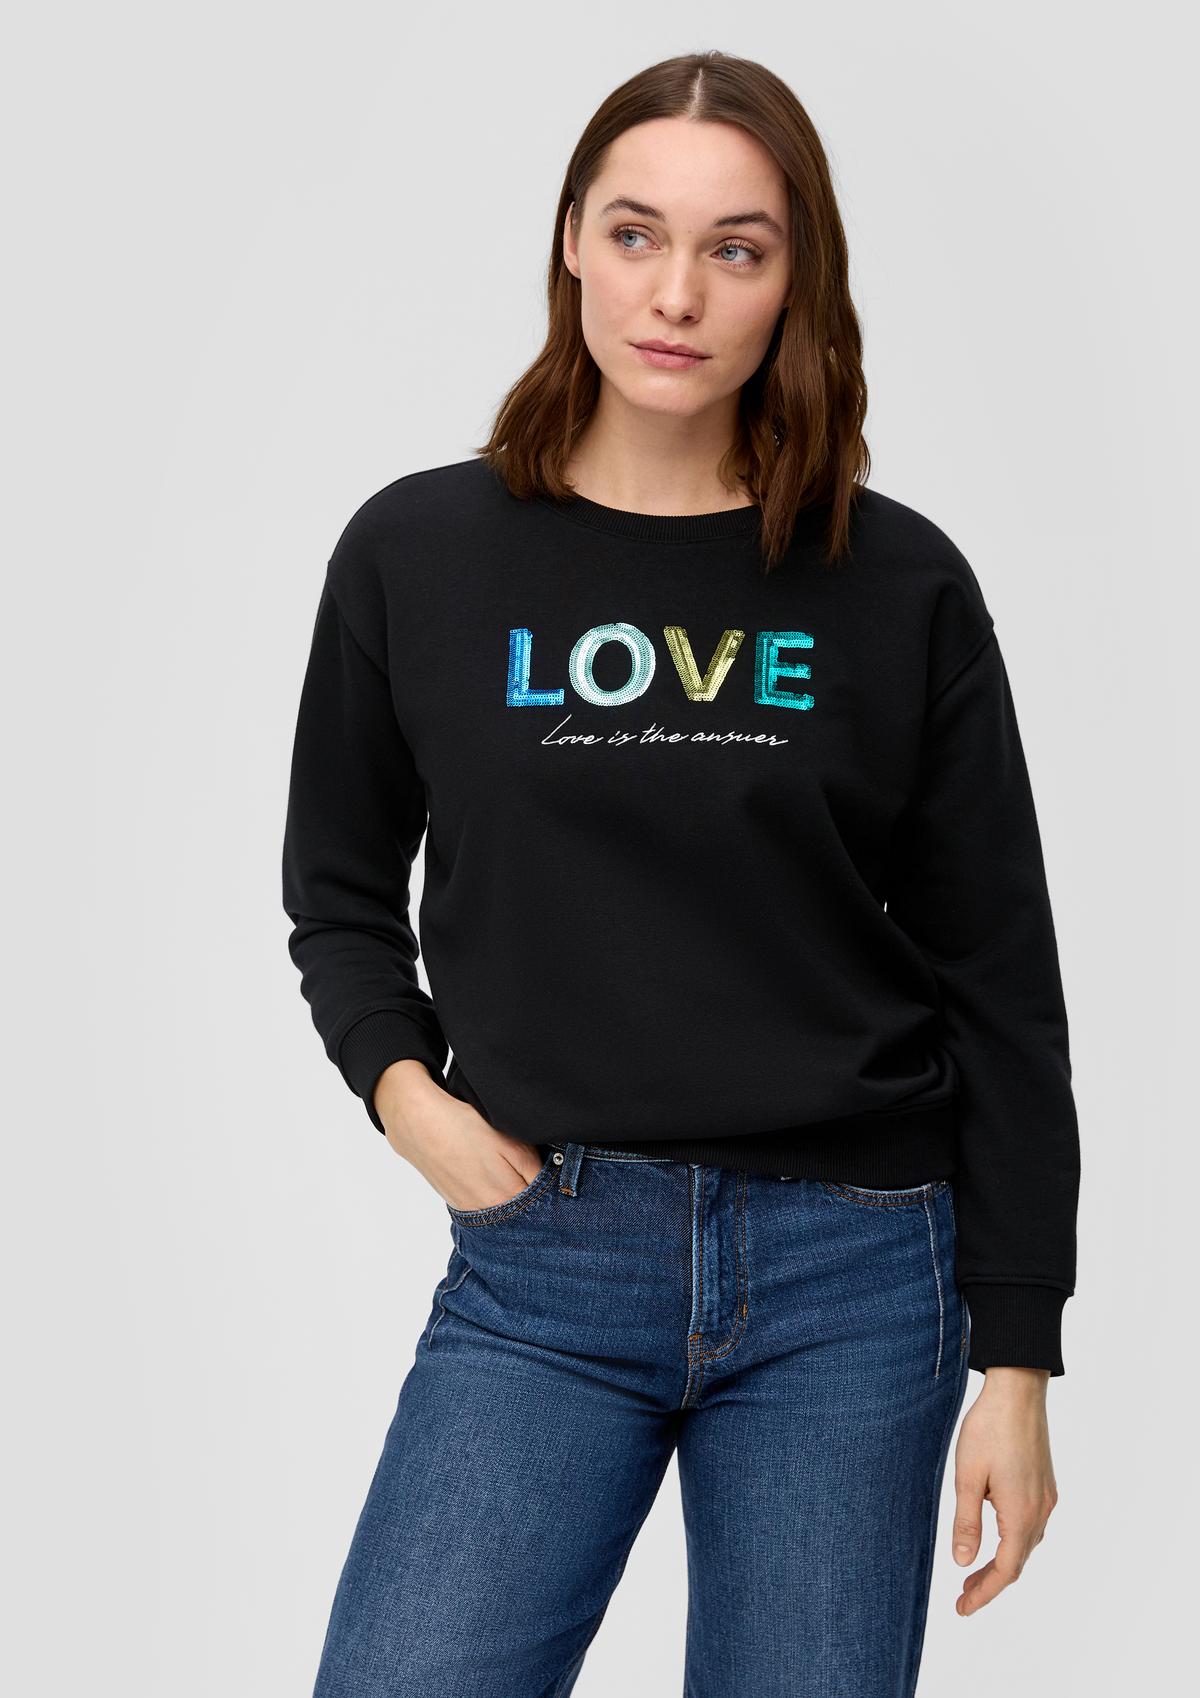 Sweatshirts for Women